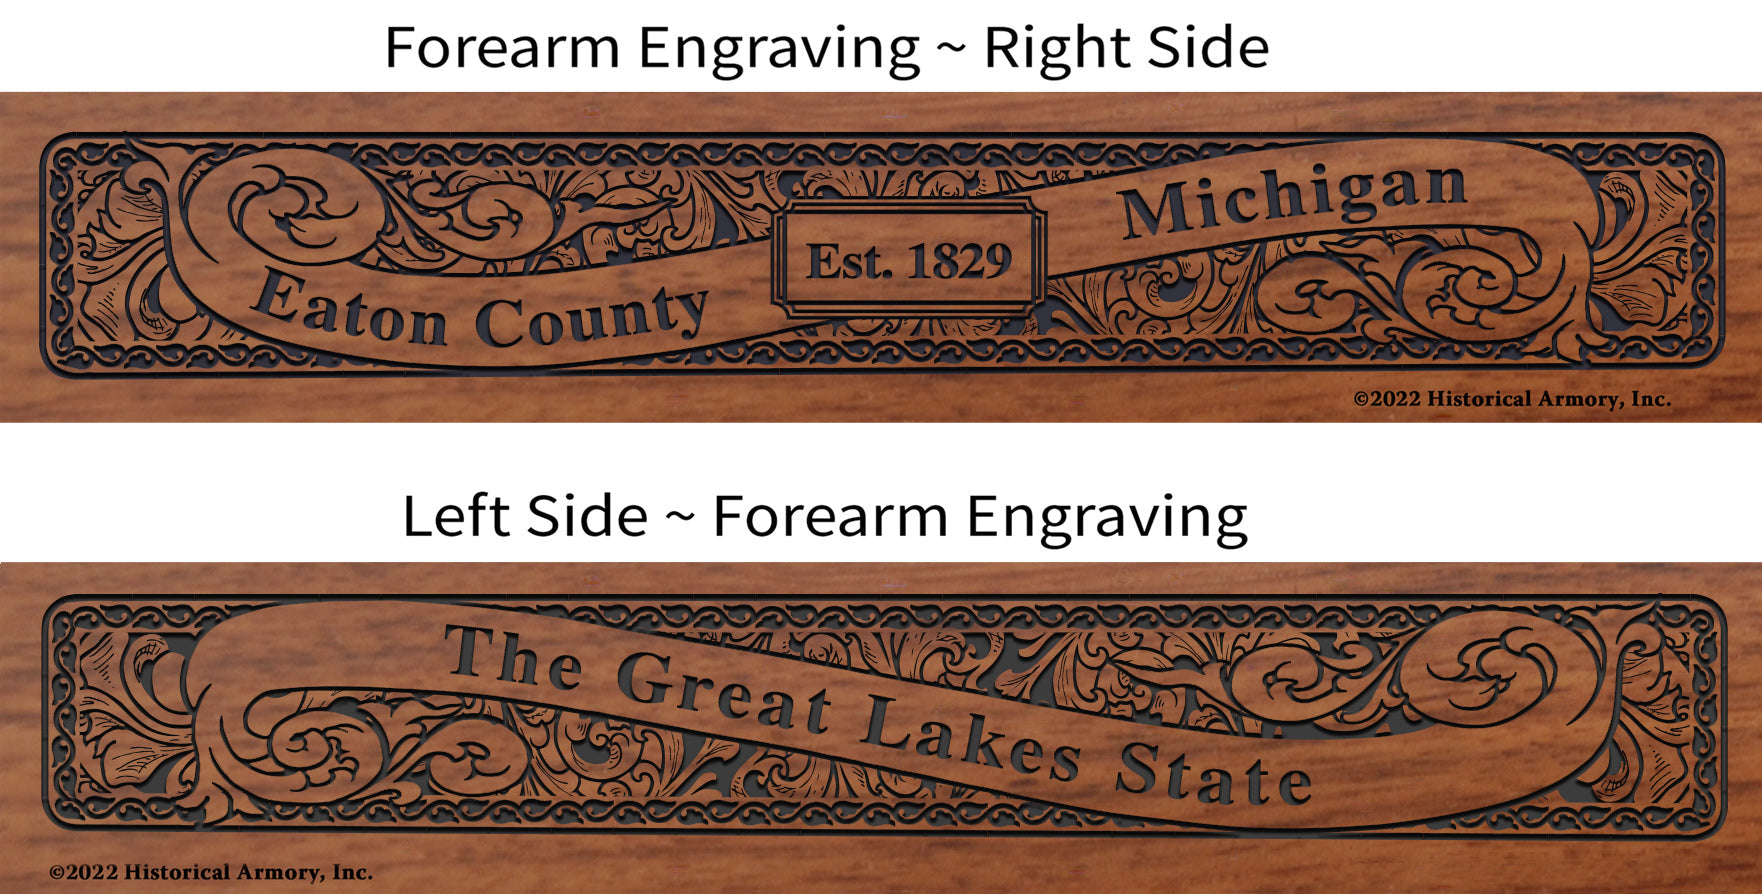 Eaton County Michigan Engraved Rifle Forearm